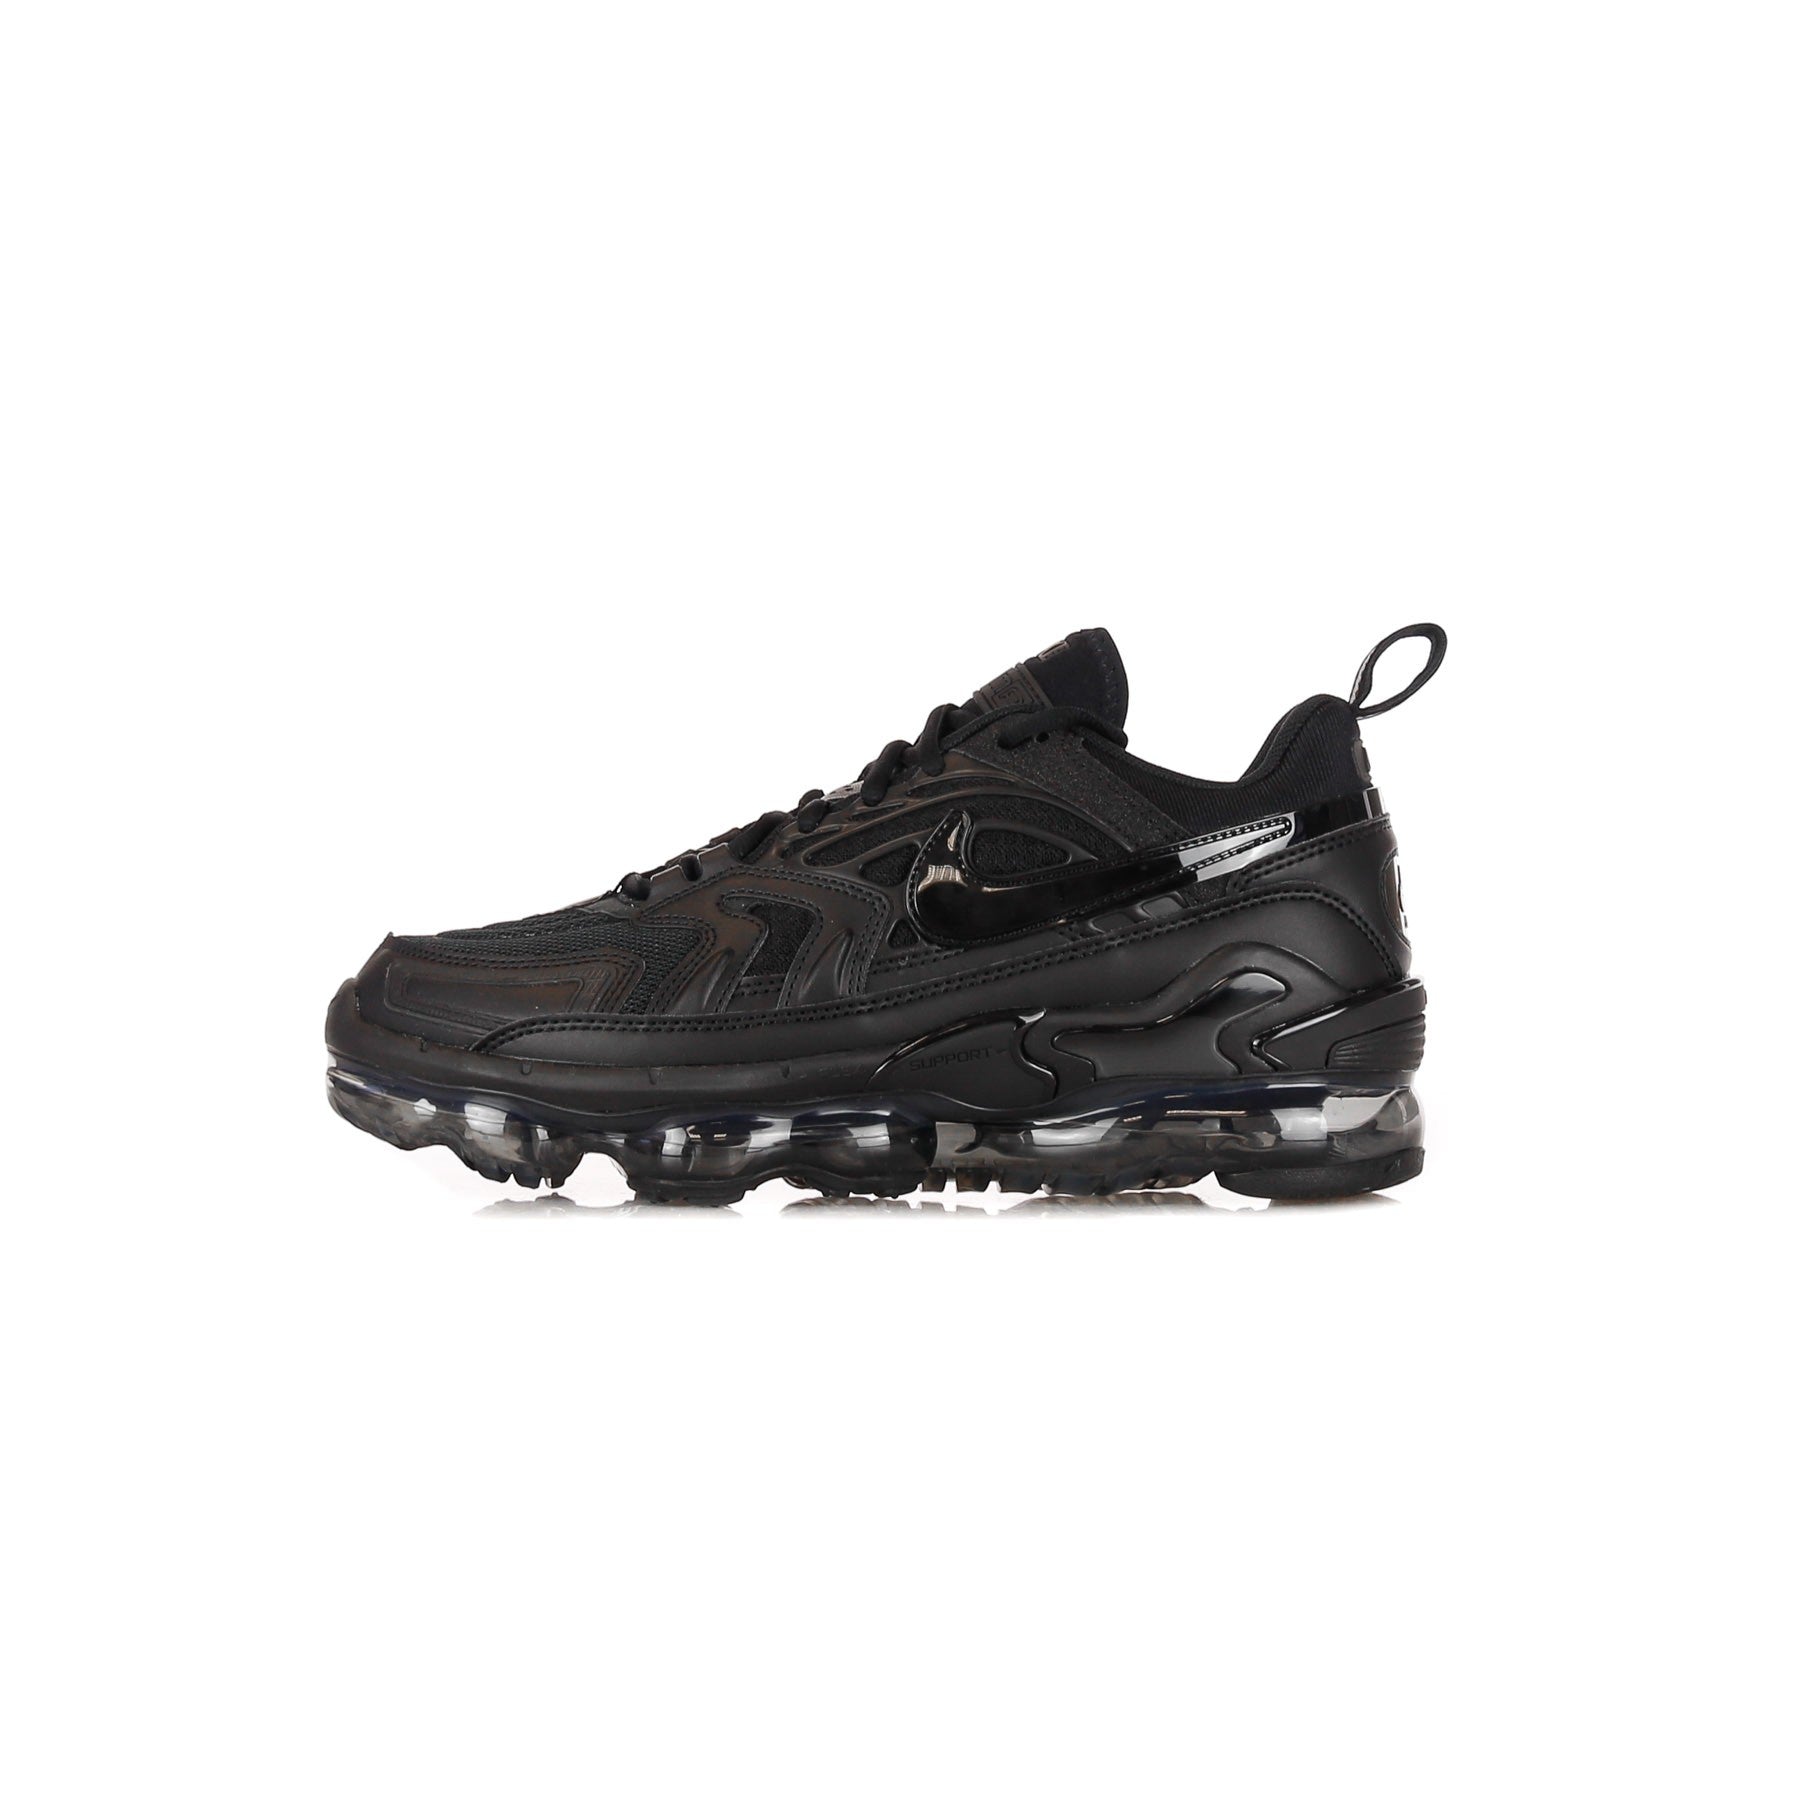 Air Vapormax Evo Men's Low Shoe Black/black/black